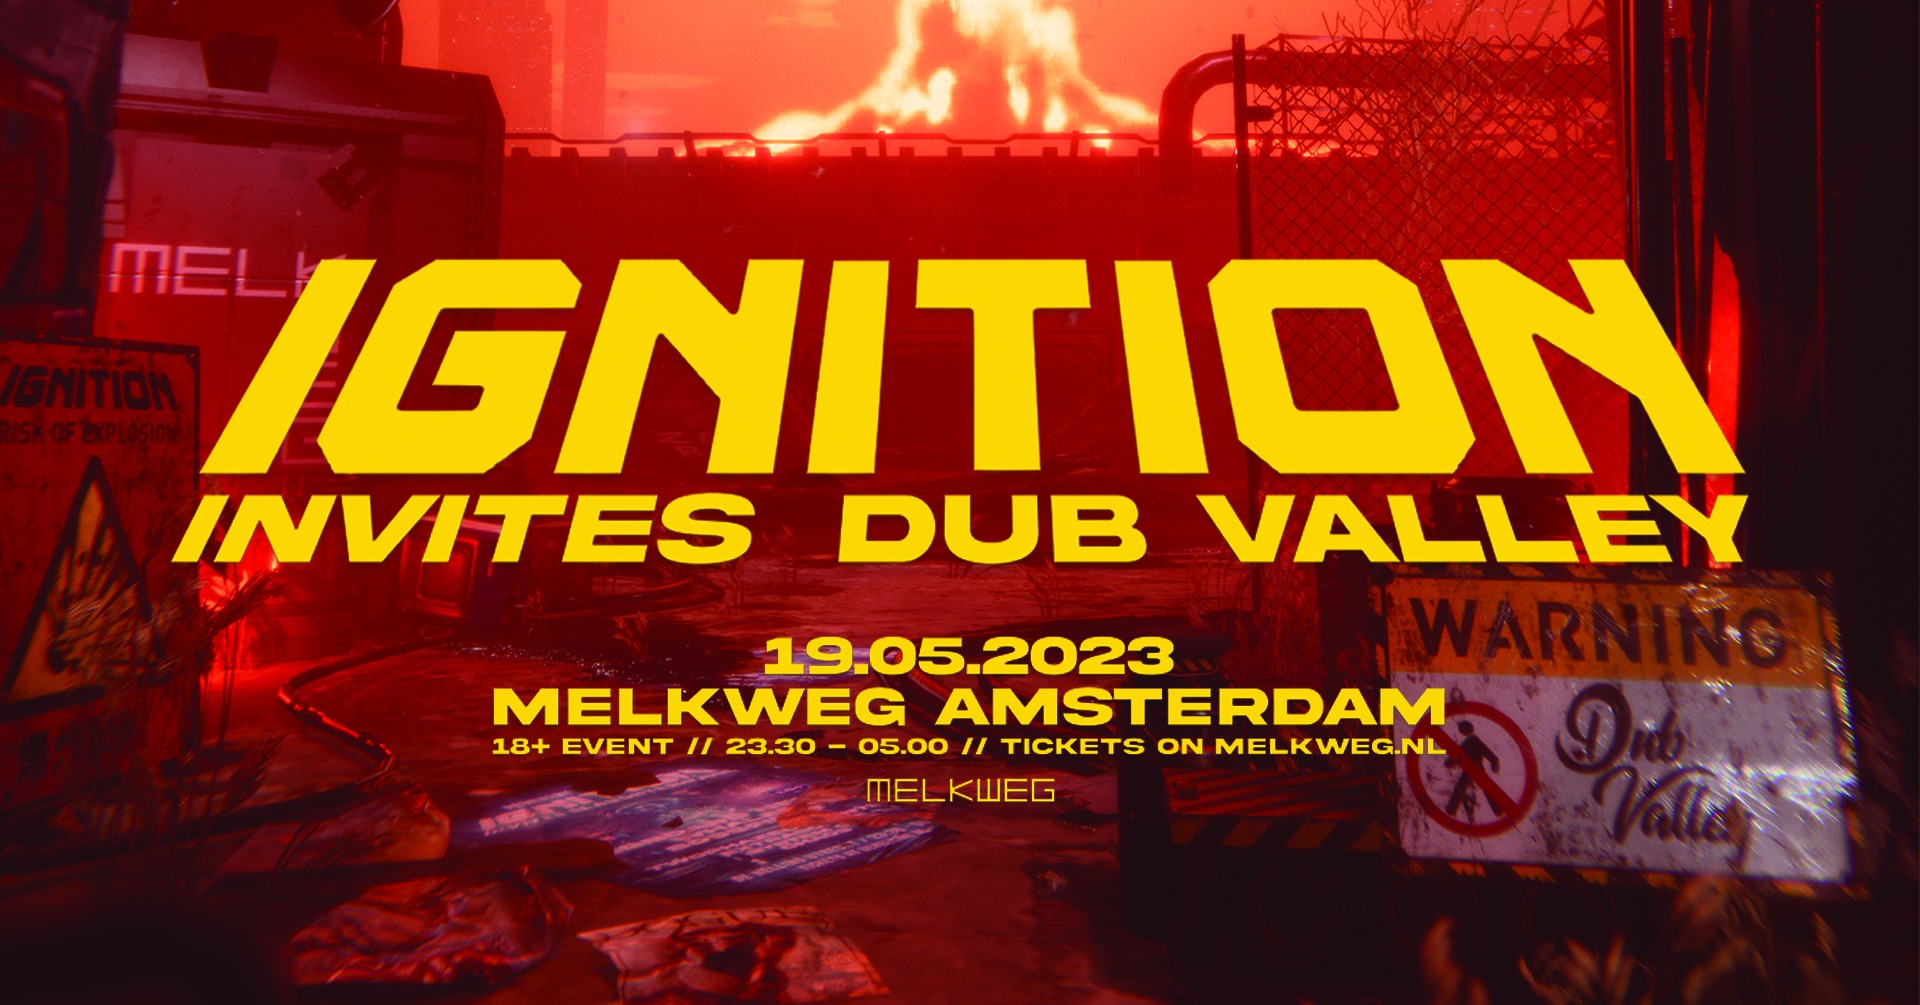 Ignition invites Dub Valley